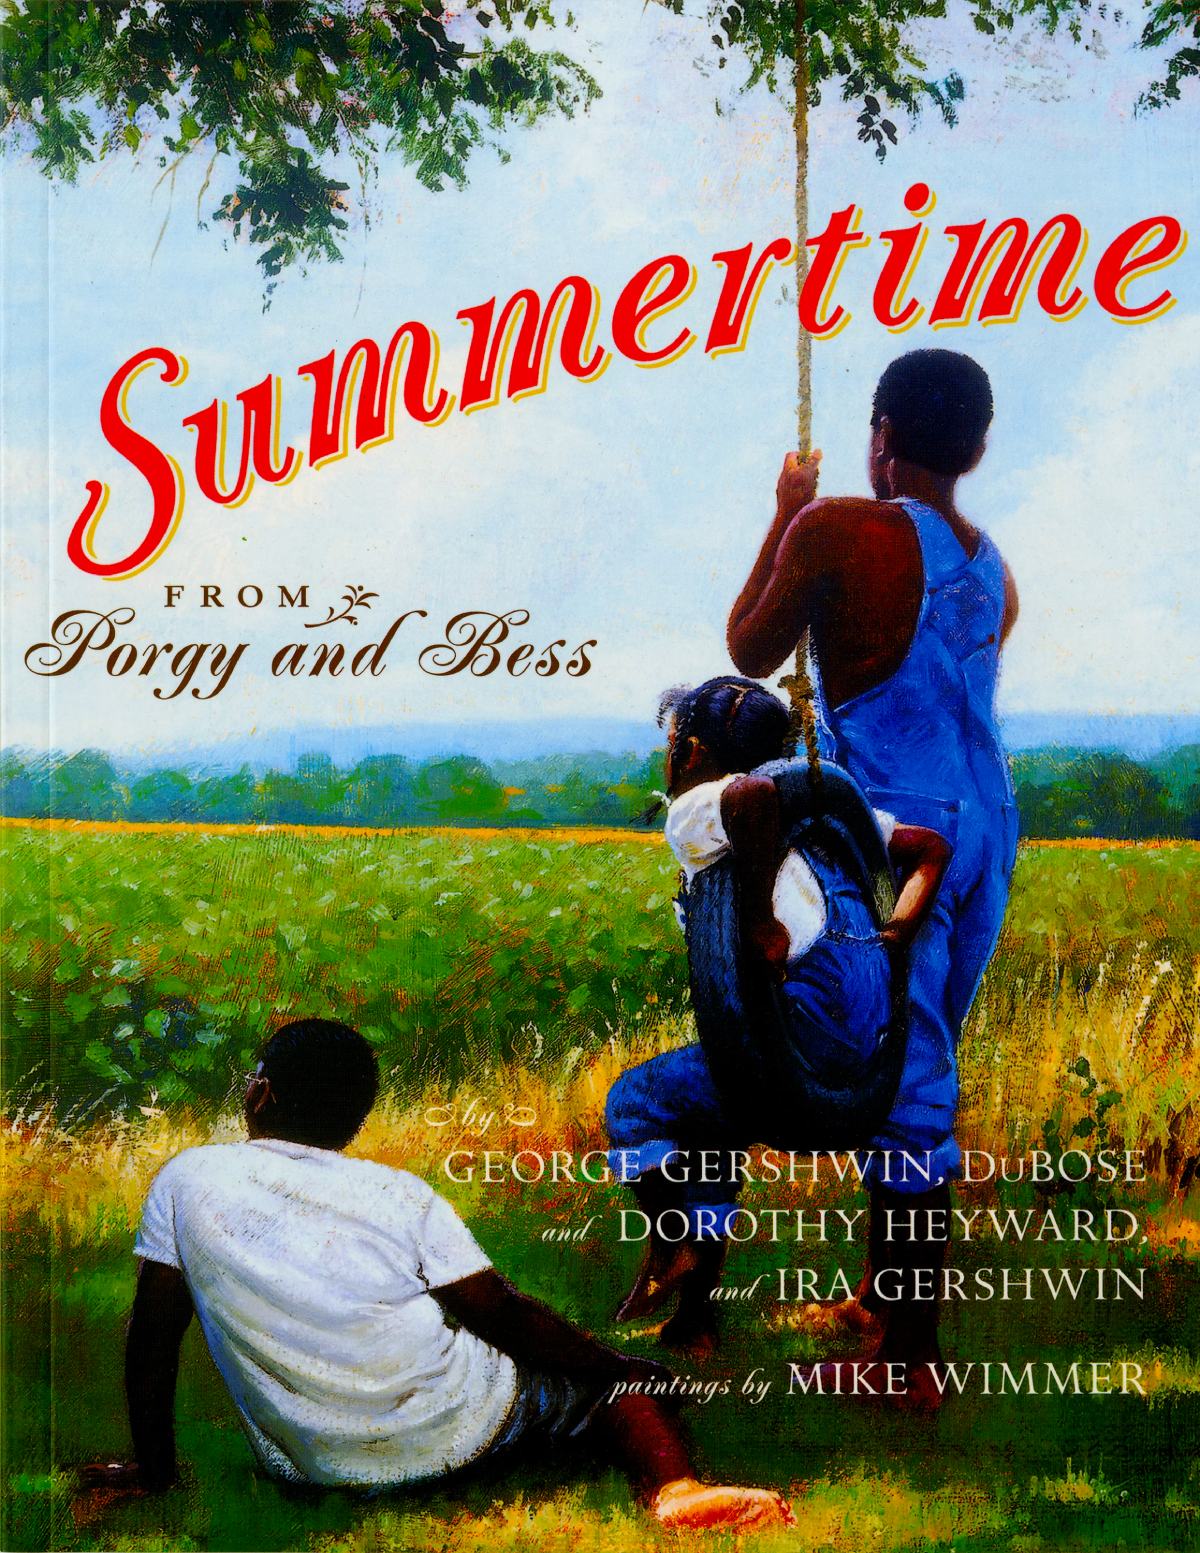 Обложка произведения «Summertime» Джорджа Гершвина